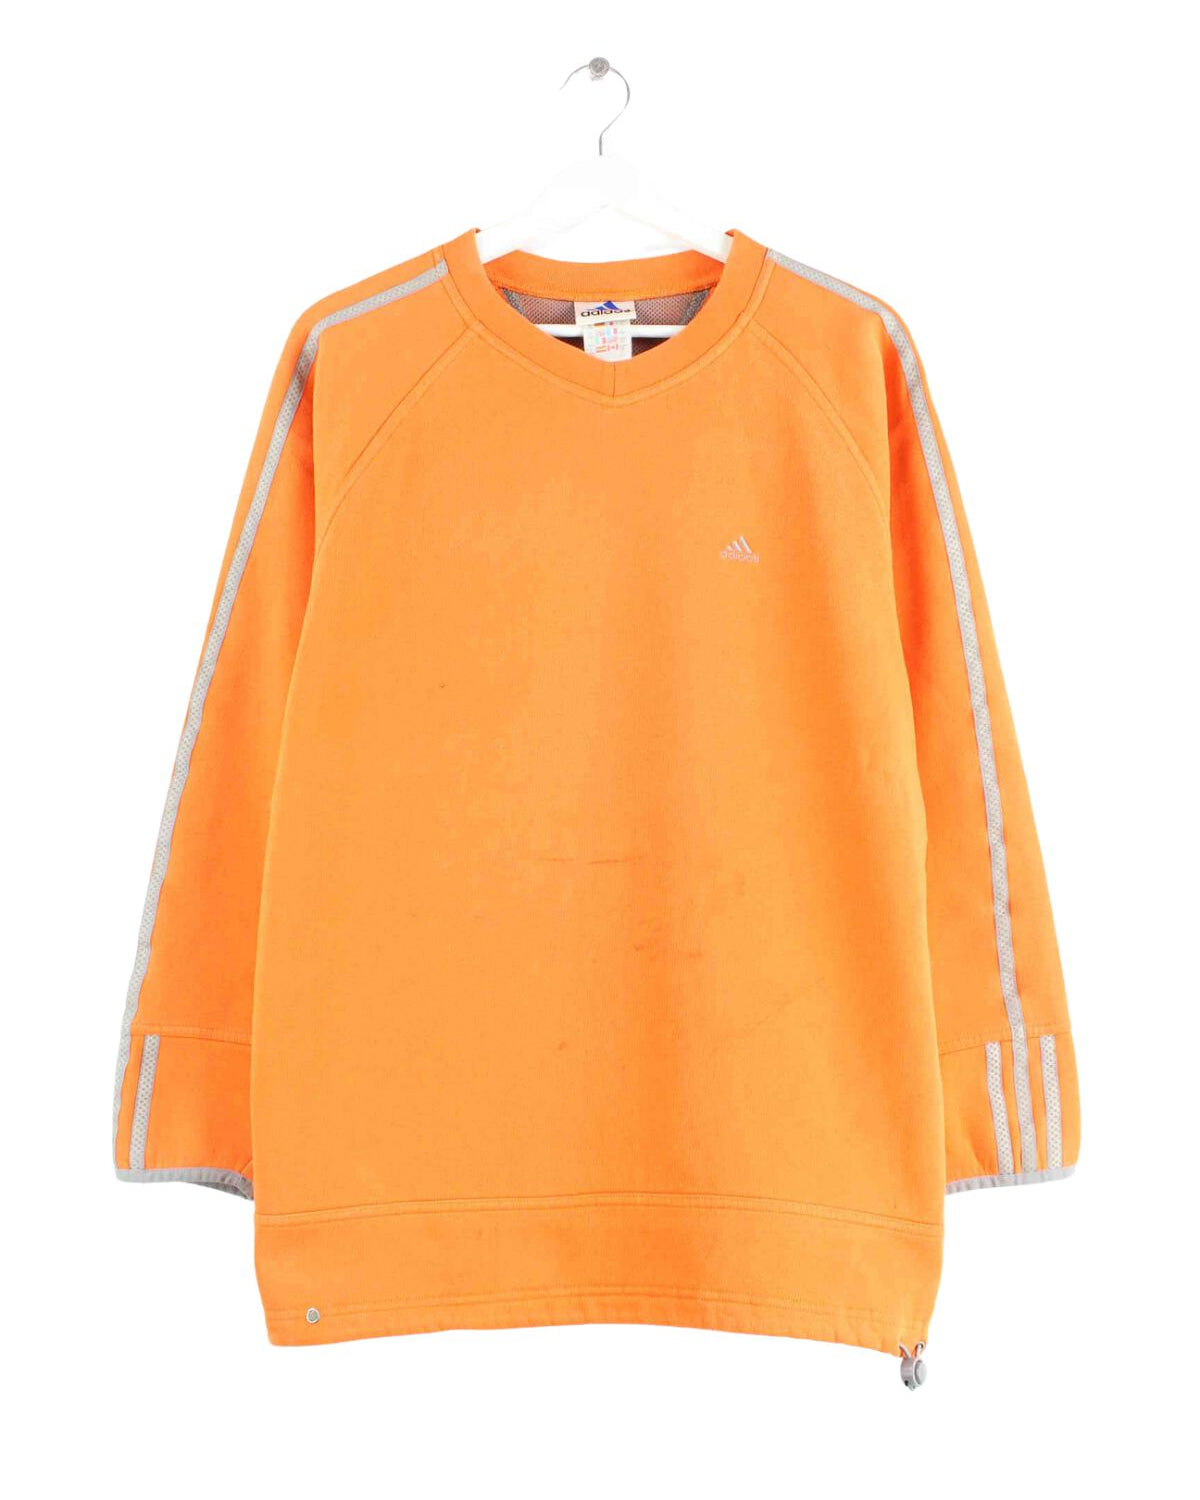 Adidas 90s Vintage Basic Sweater Orange L (front image)